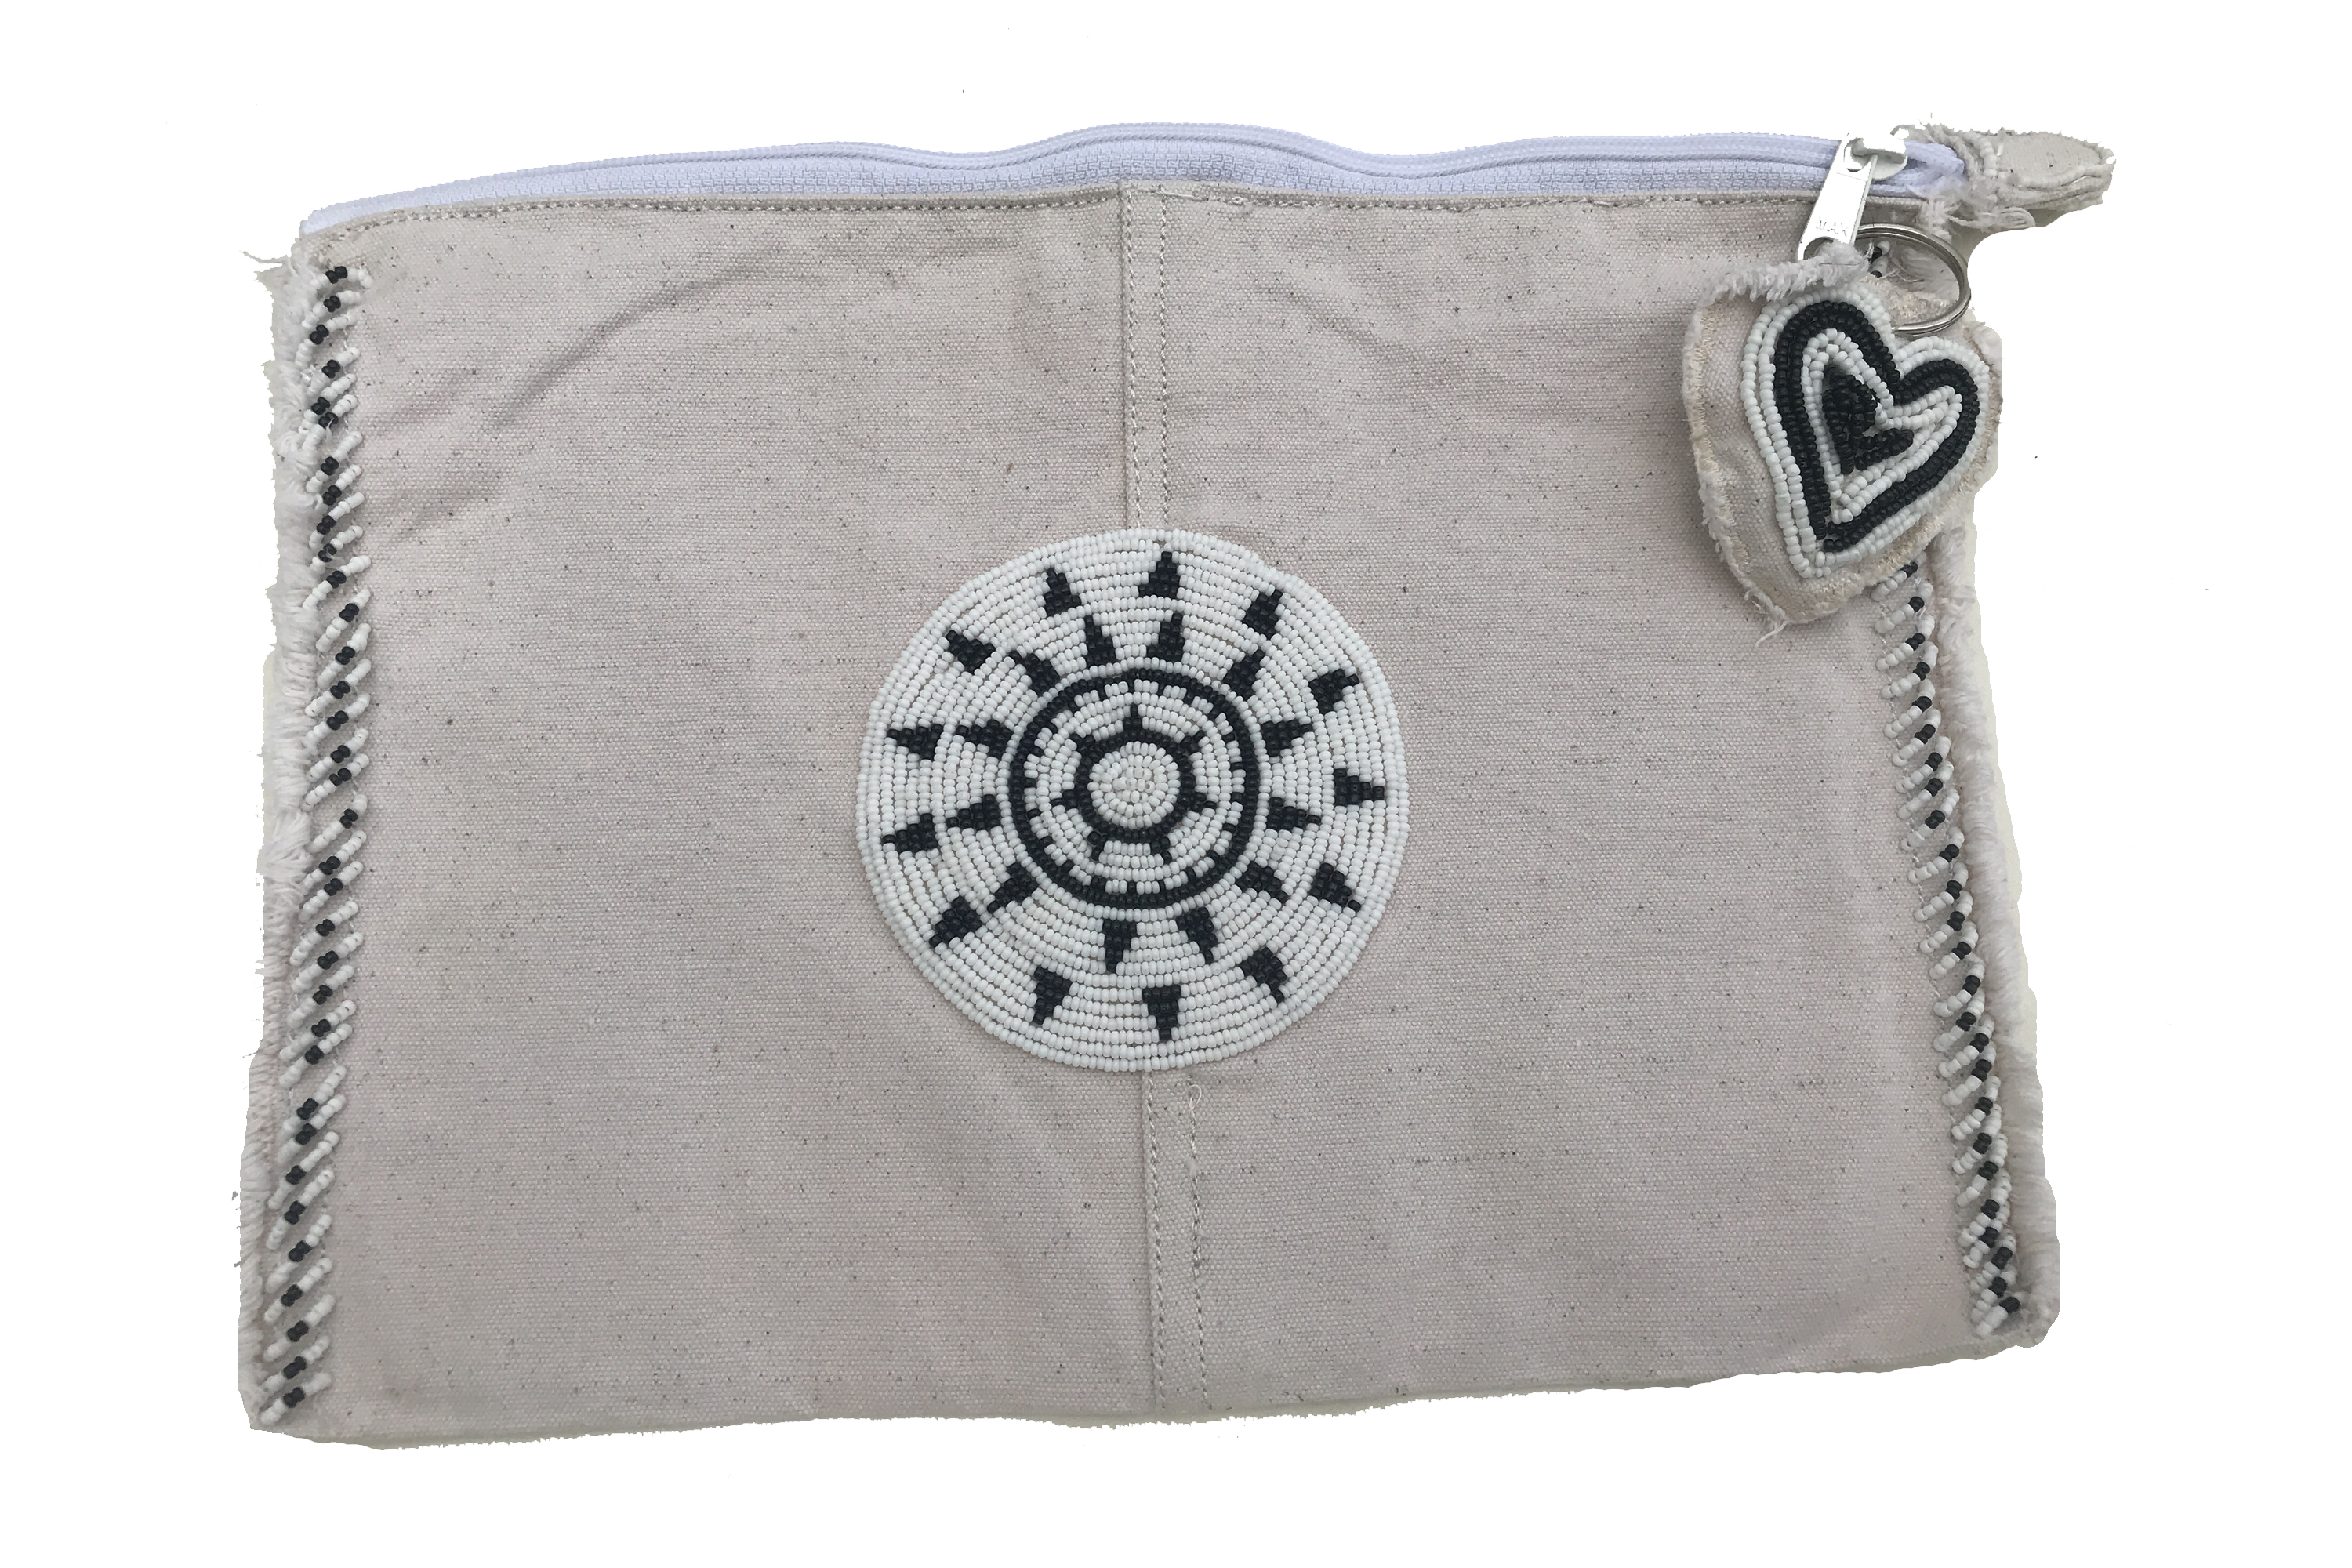 Ipad Canvas bag - OFF-WHITE-15